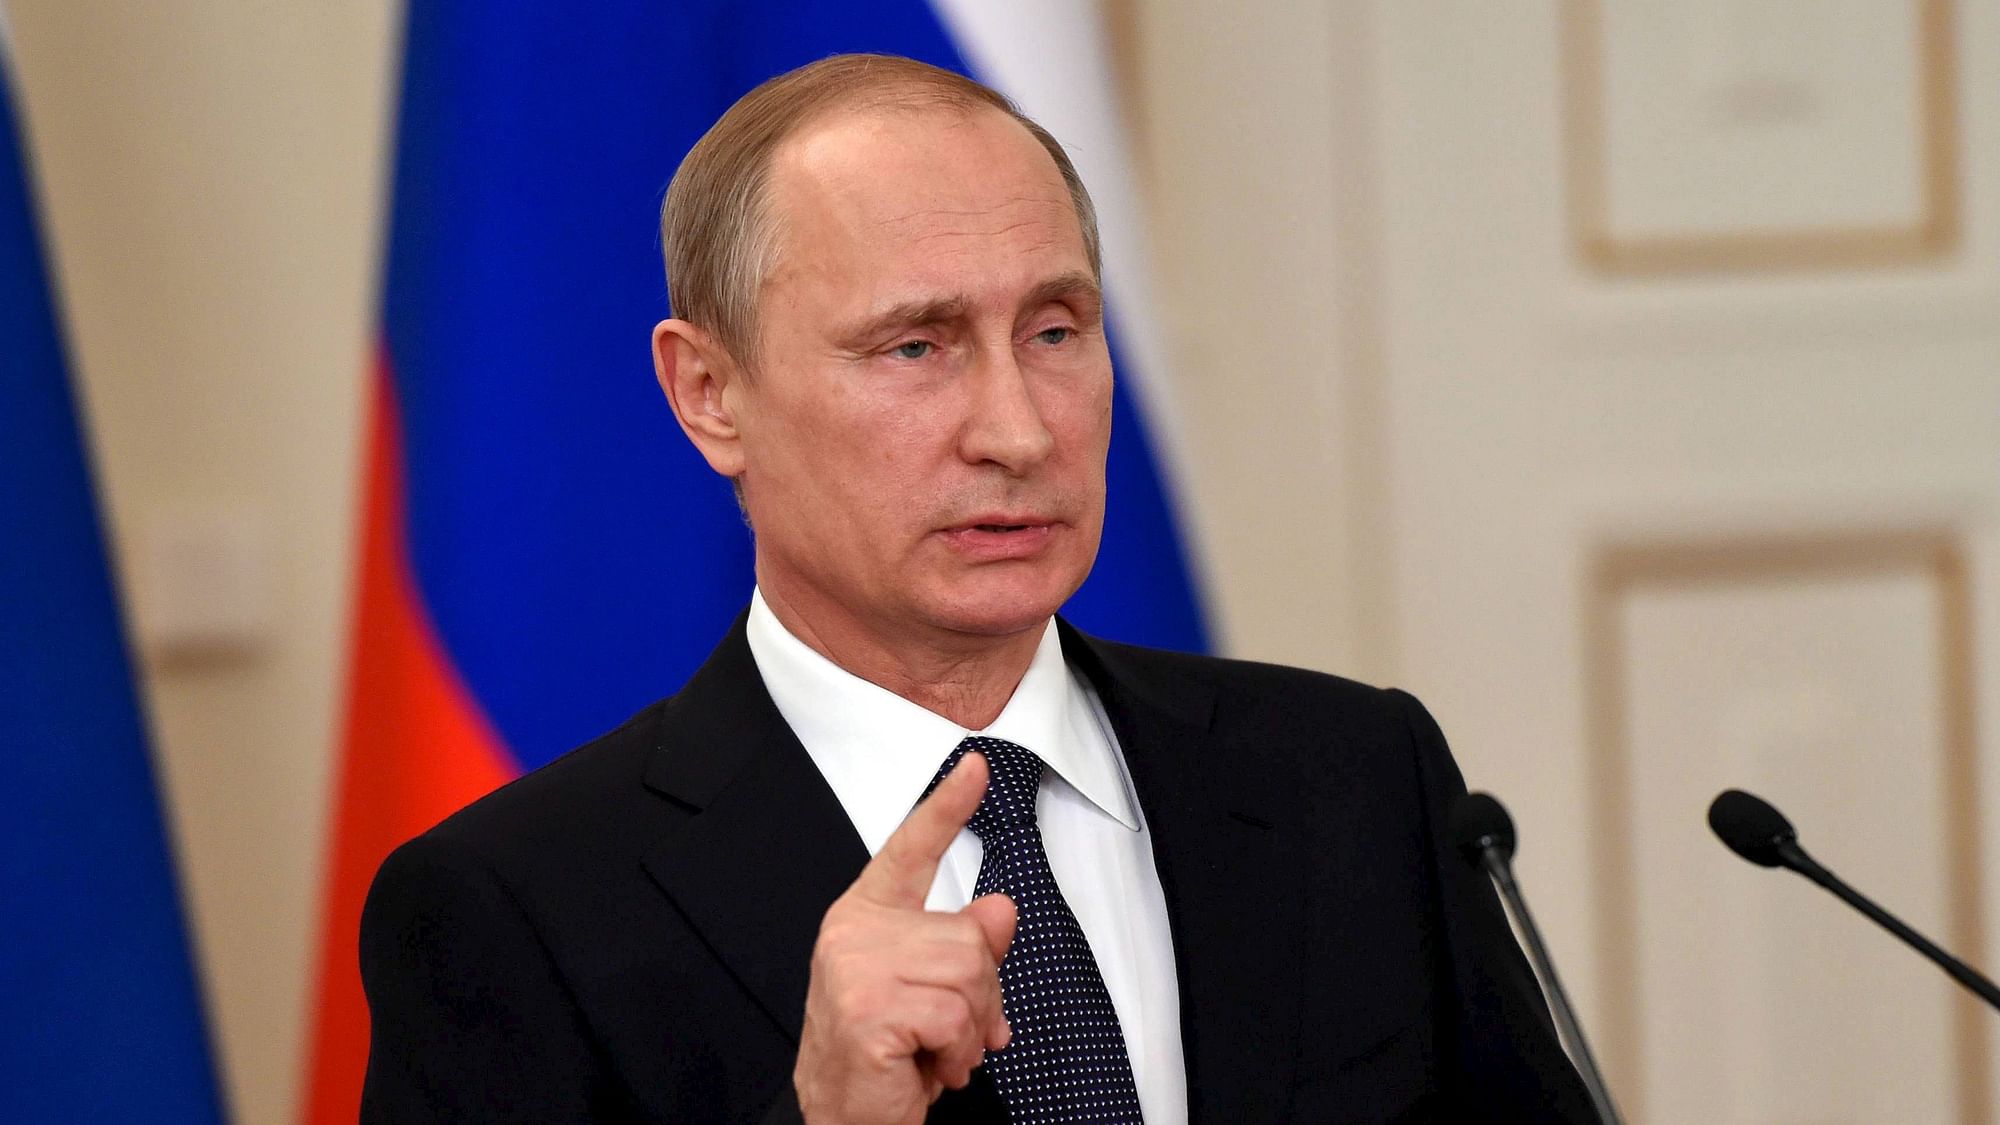 File image of Russian President Vladimir Putin.